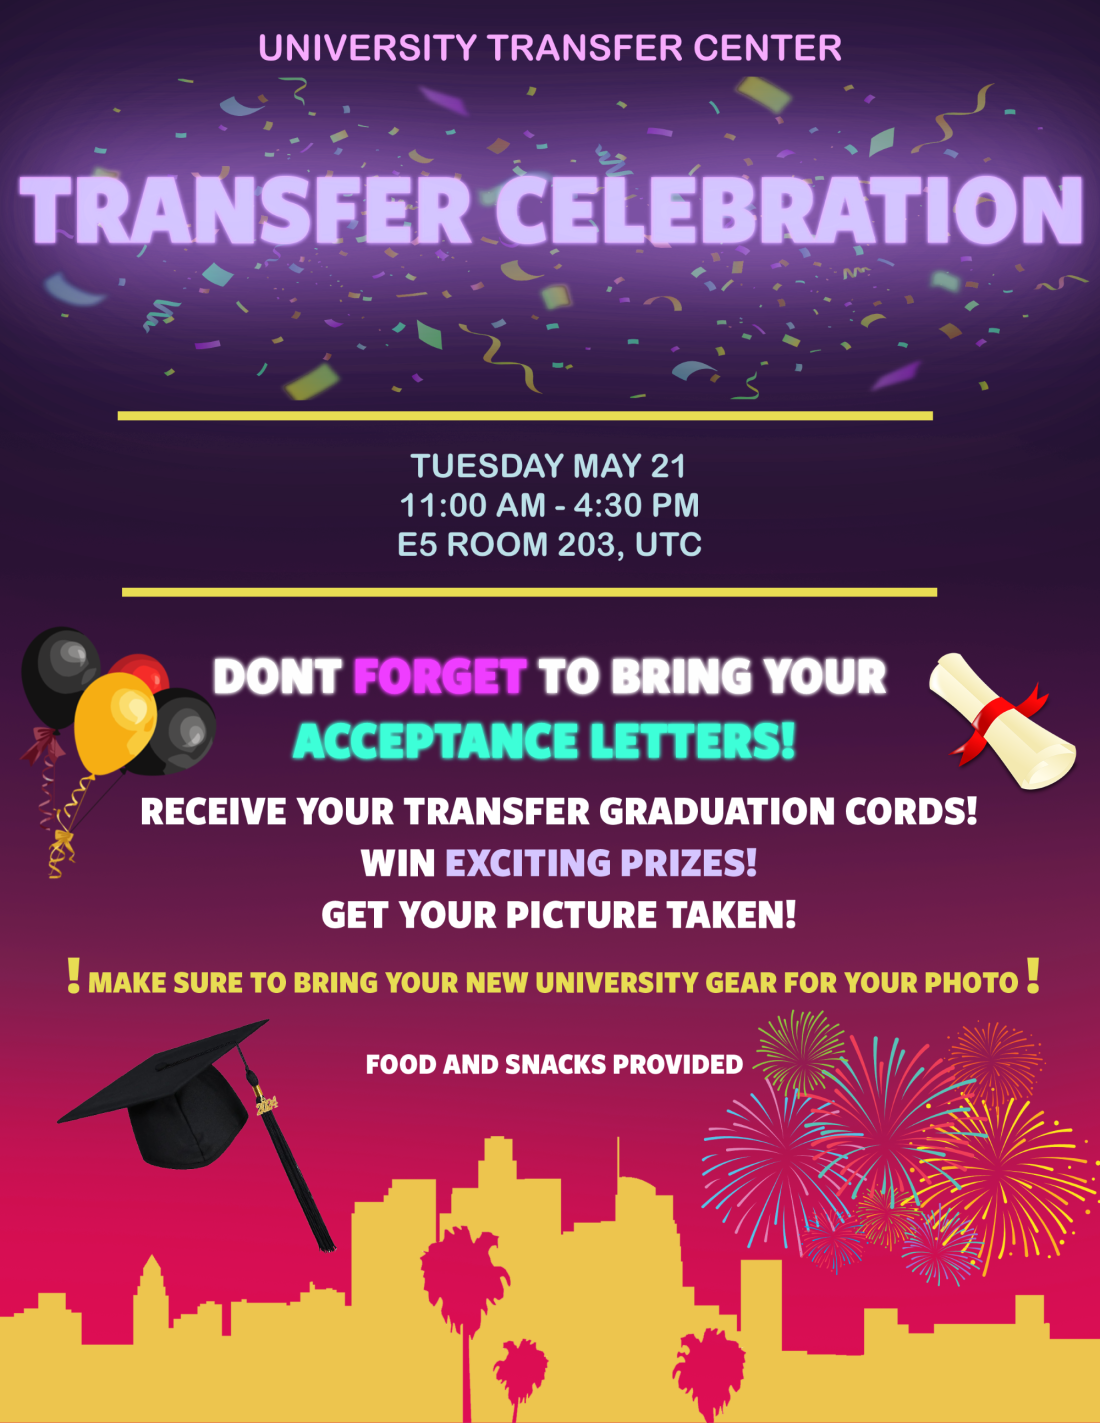 University Transfer Center Transfer Celebration flyer